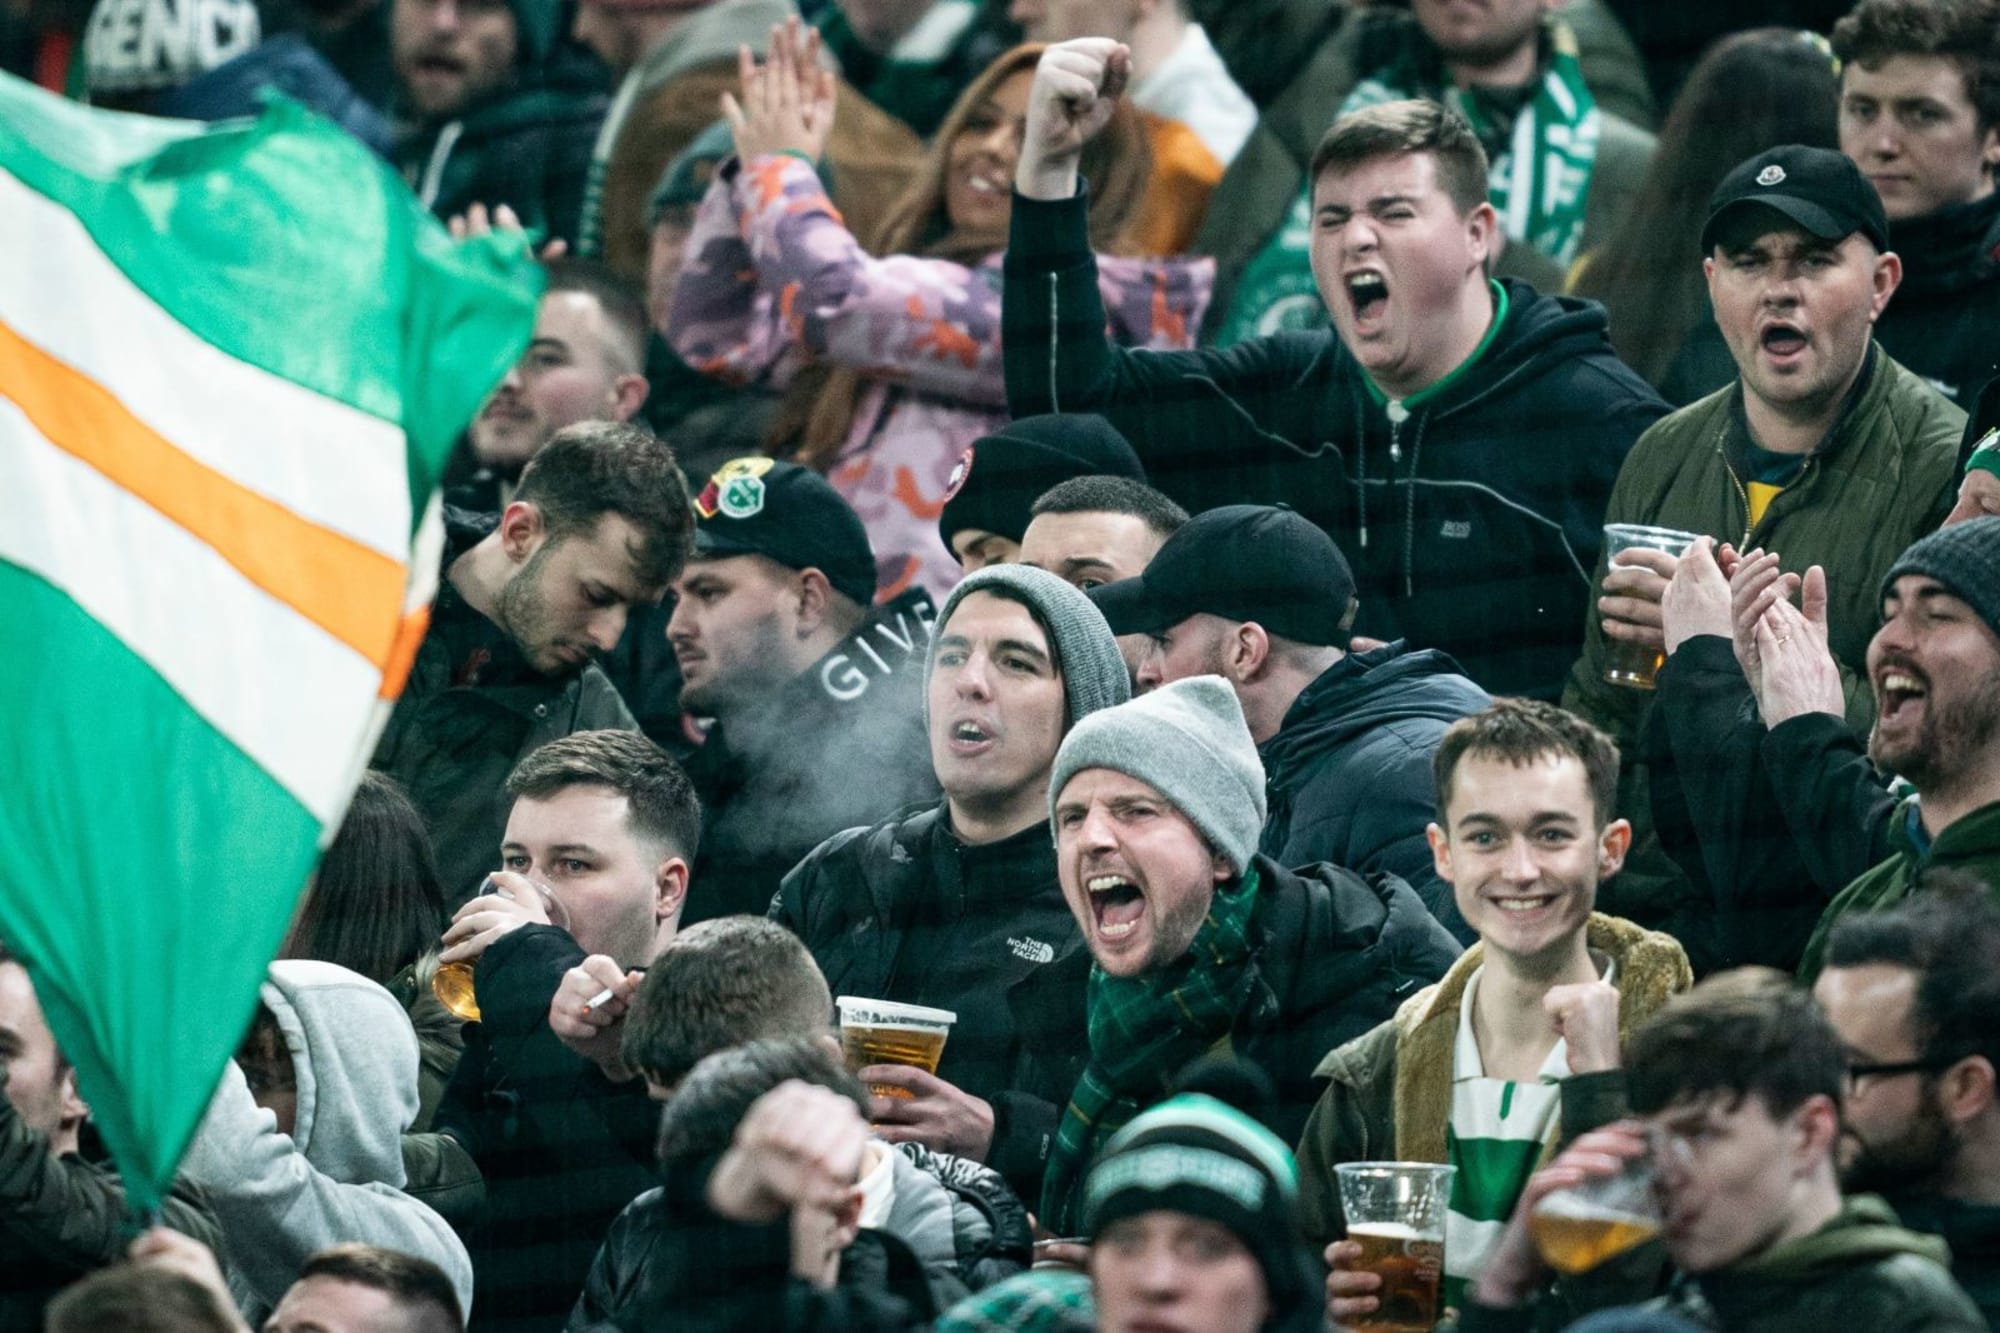 Absolute idiot' - Celtic fans blast former Rangers star